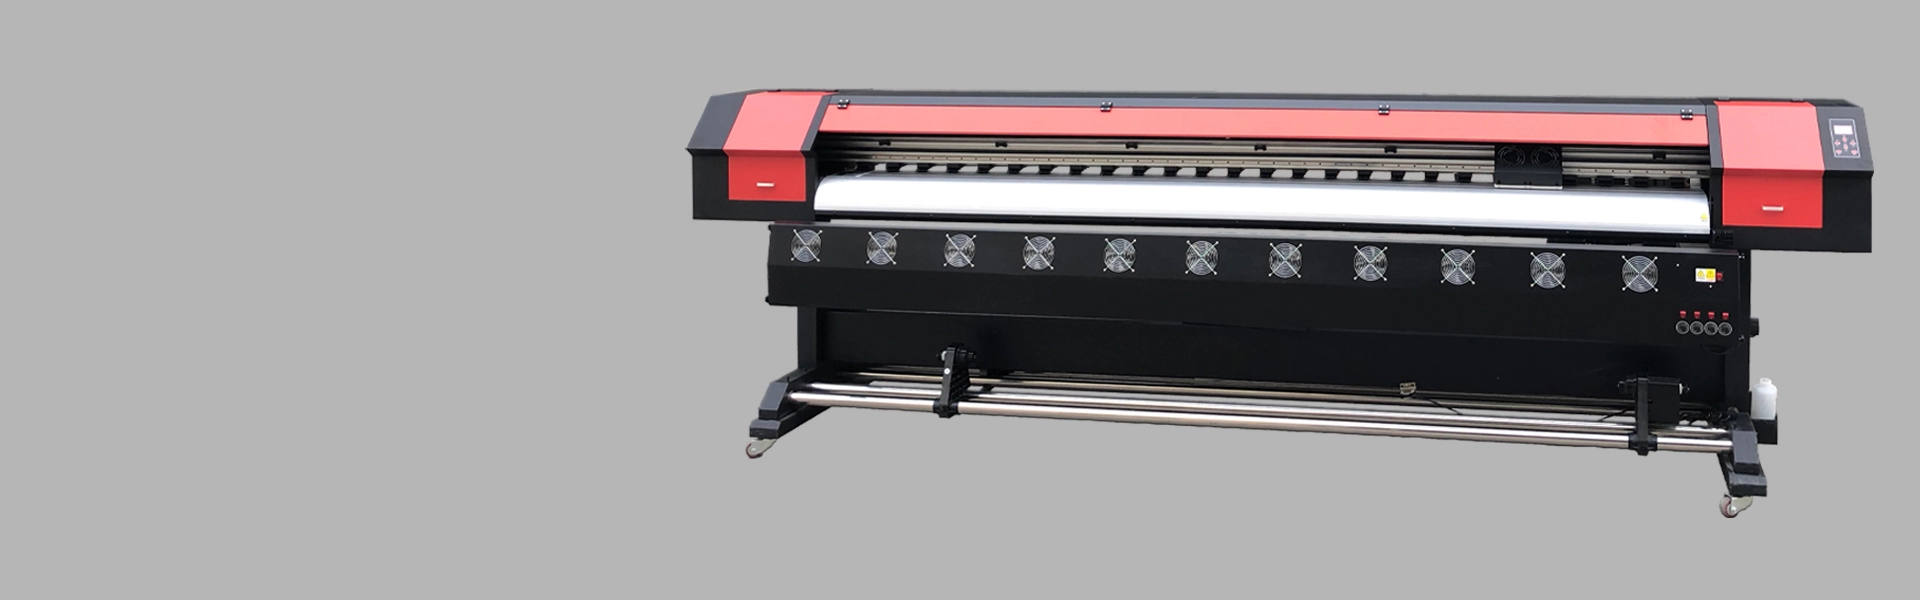 Imprimante XP600 de 3,2 m